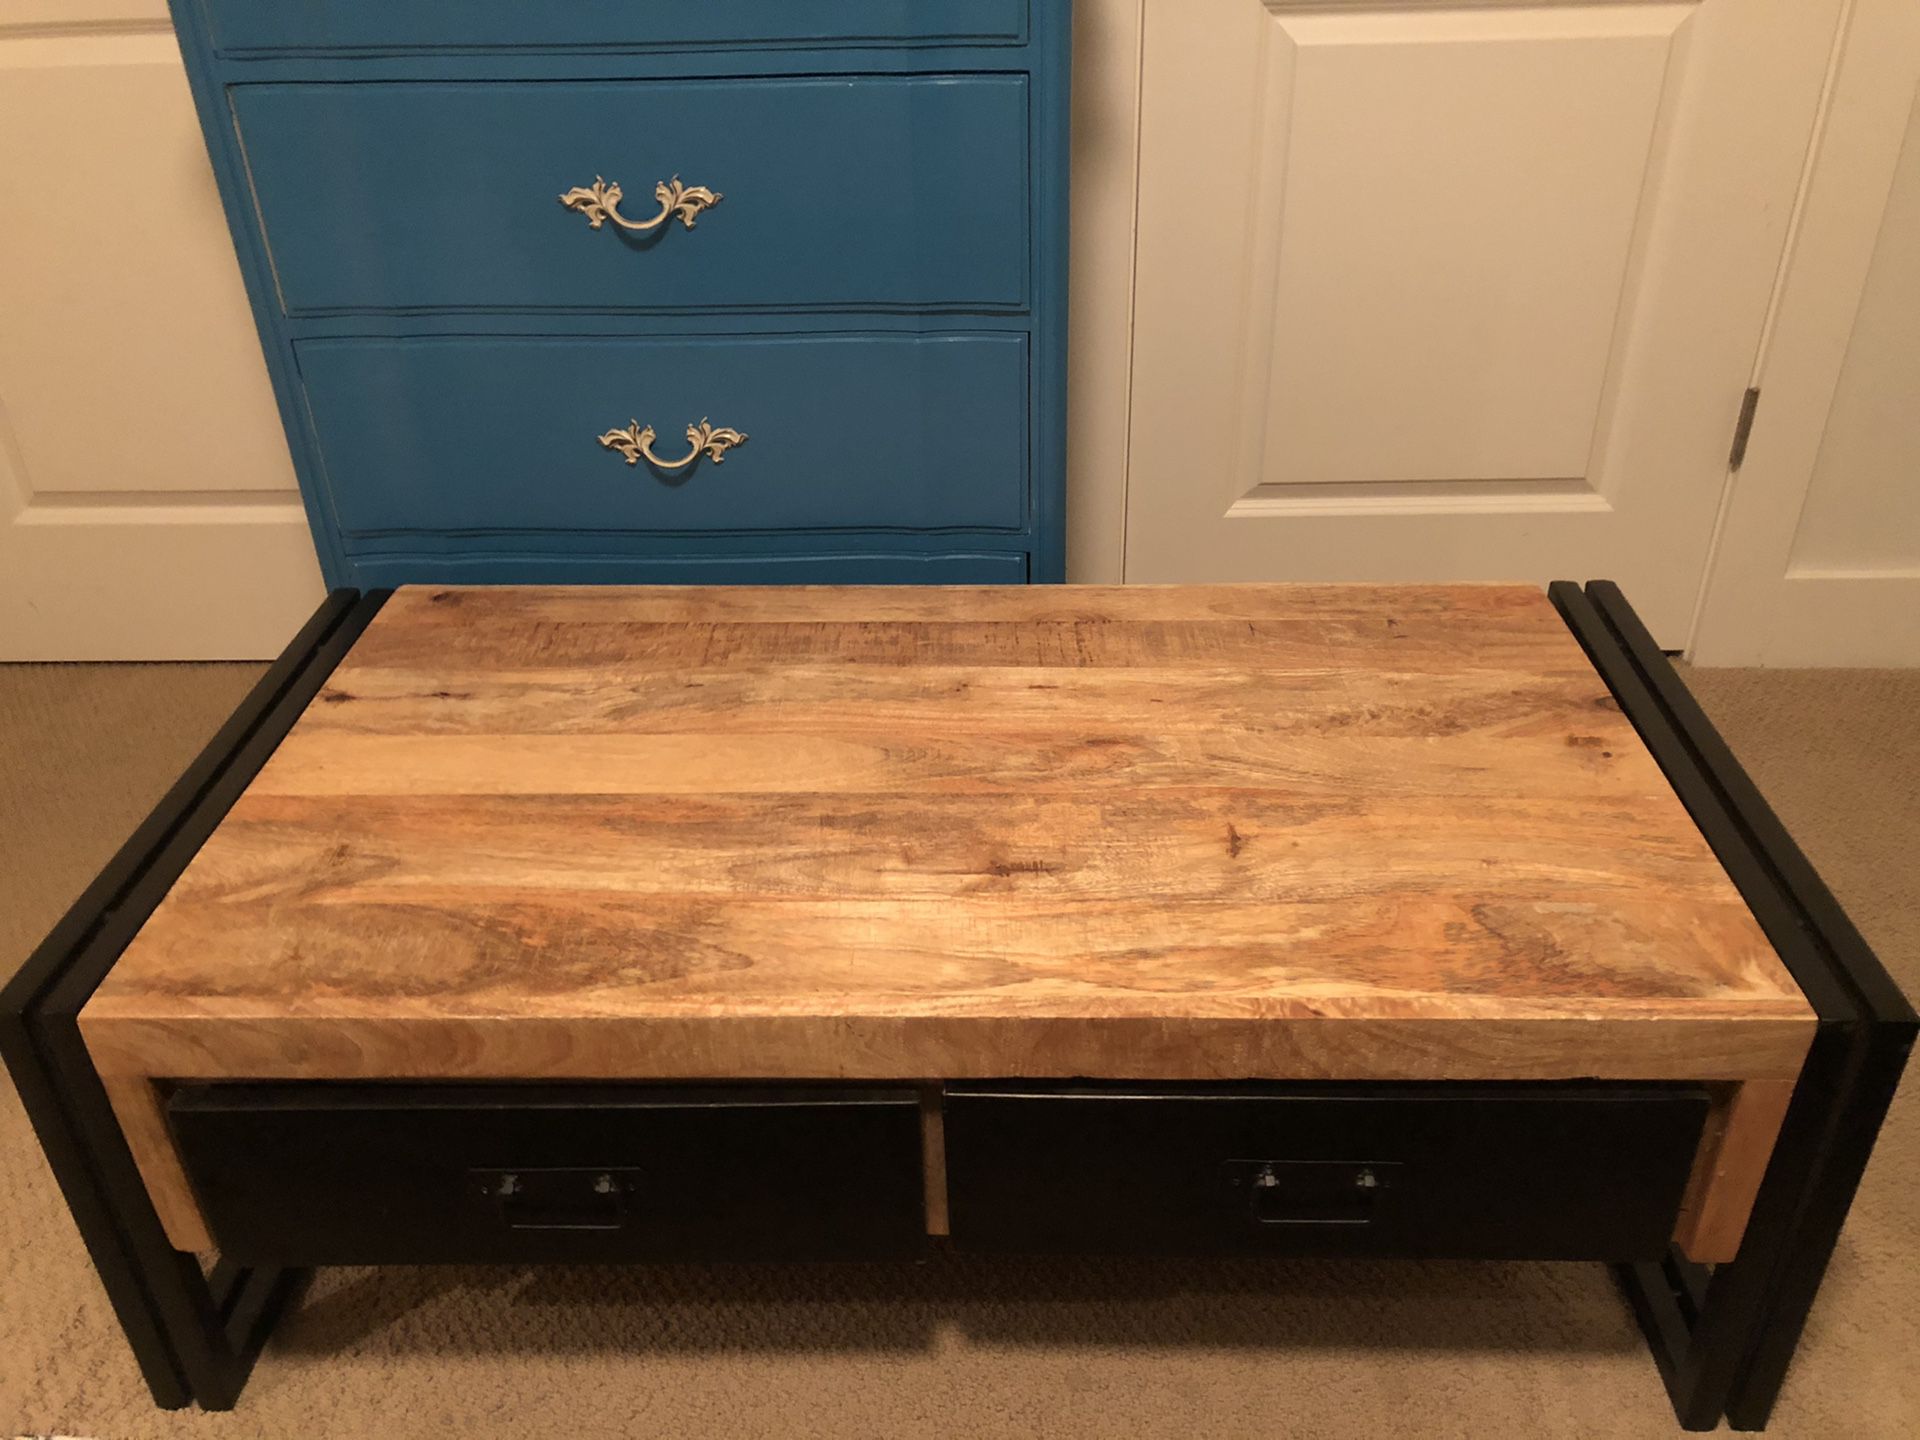 Rustic reclaimed wood coffee table.